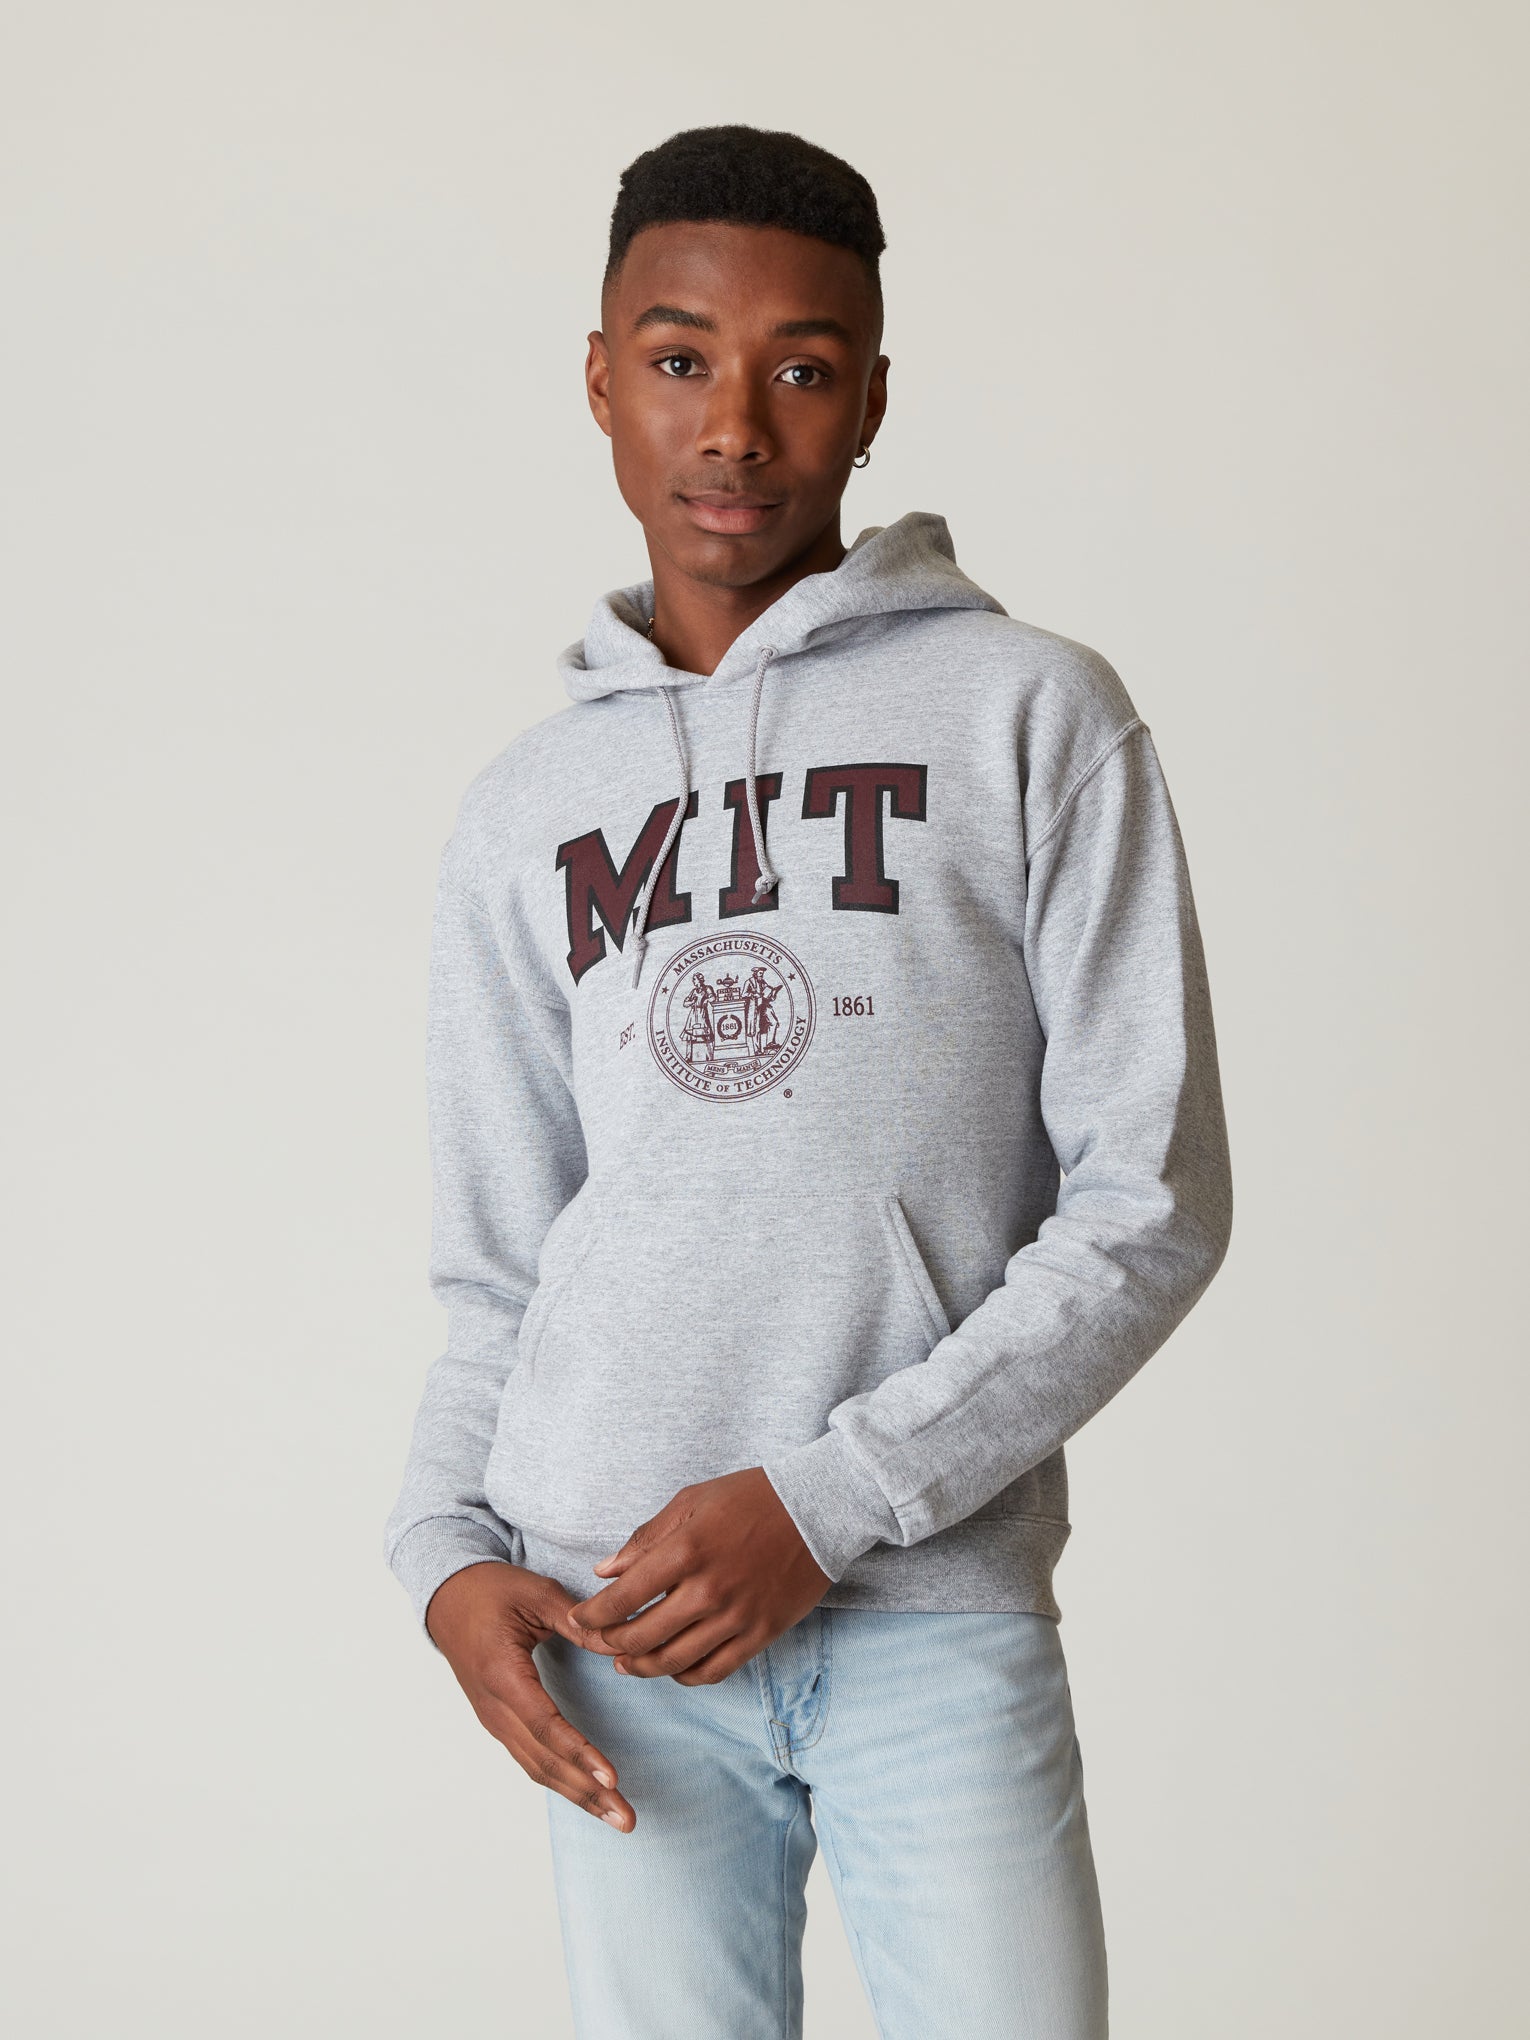 Shop The Hooded Sweatshirt – MIT Harvard